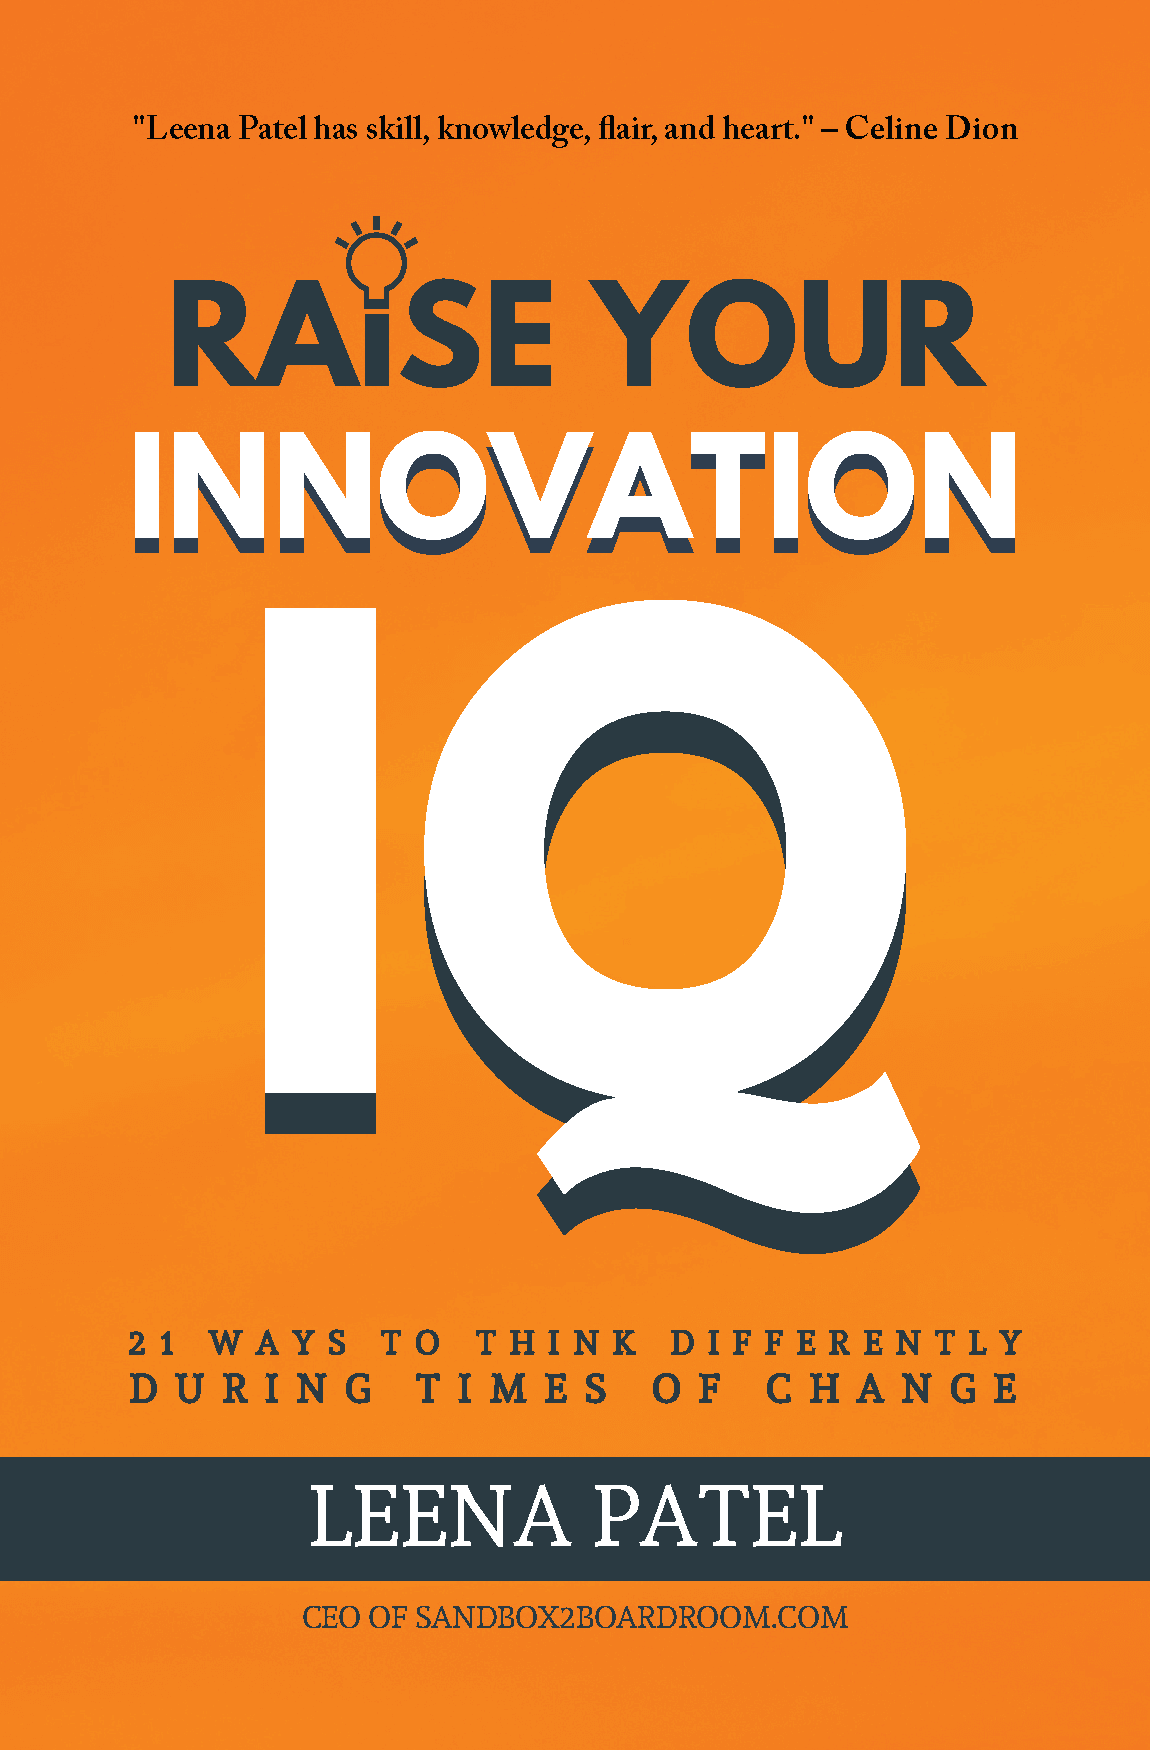 Raise Your Innovation IQ book